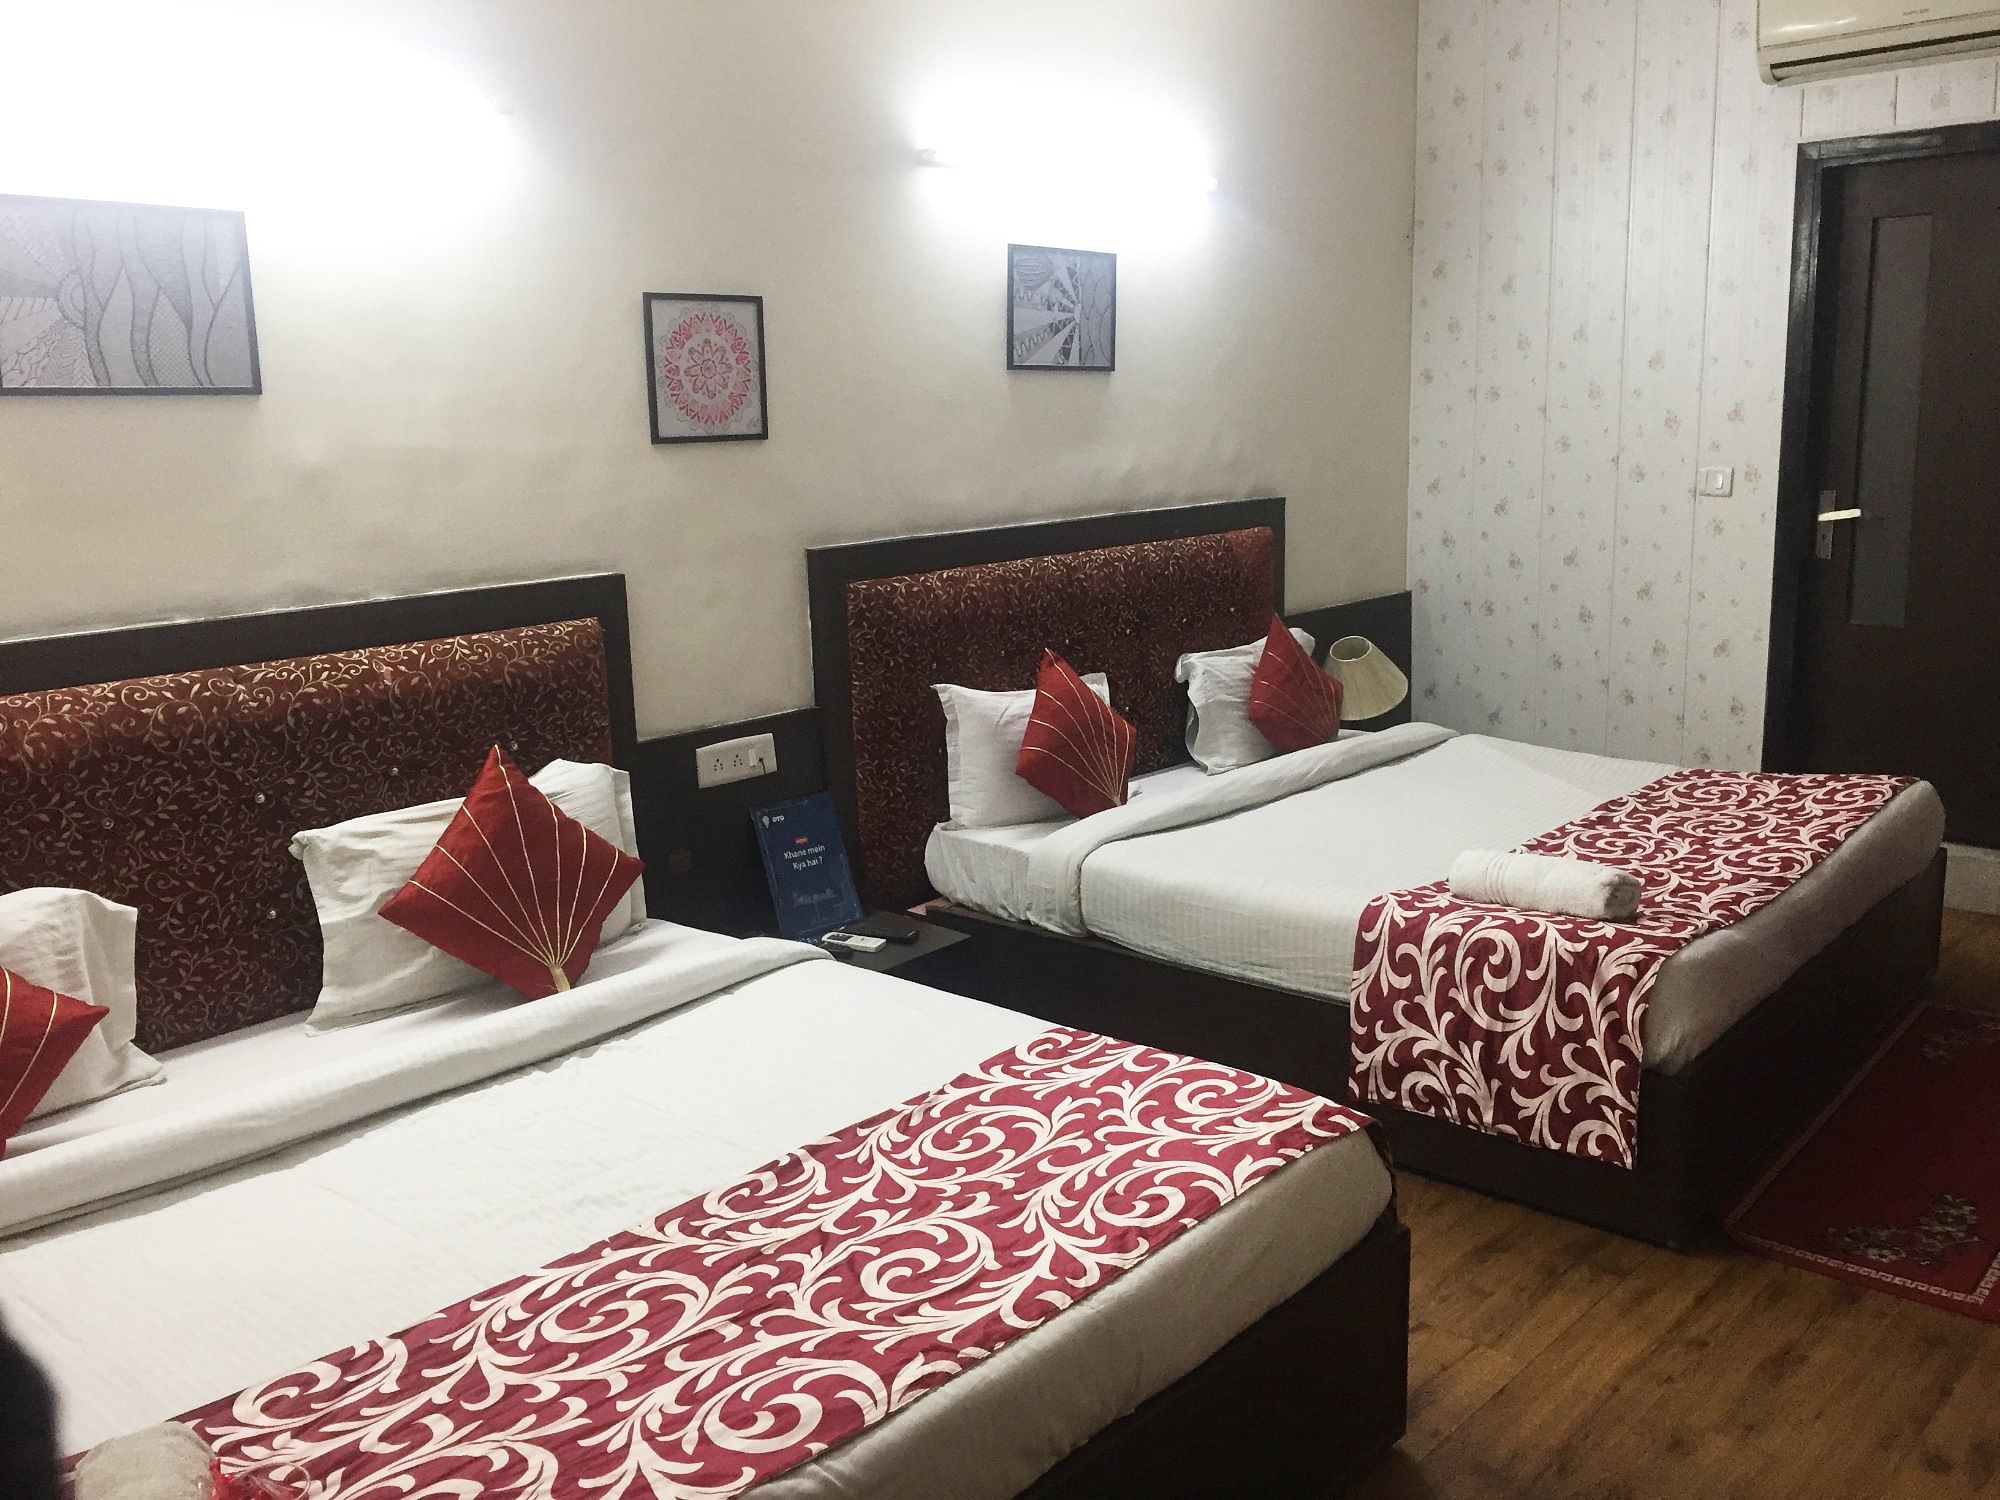 Anantkoti Hotel in Chattarpur, Delhi